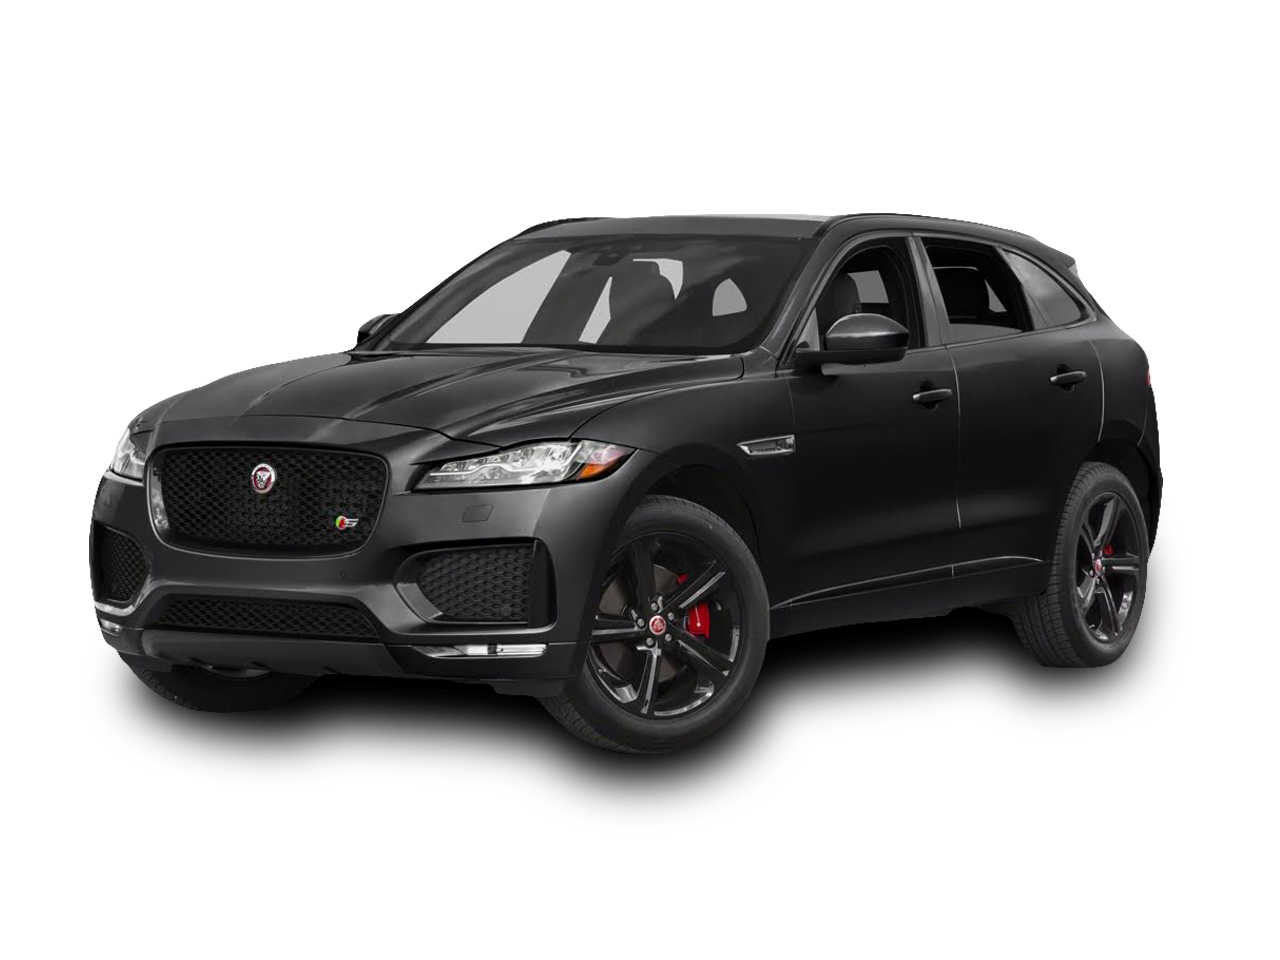 2019 Jaguar F-PACE For Sale in Van Nuys - Galpin Jaguar Dealer Los Angeles